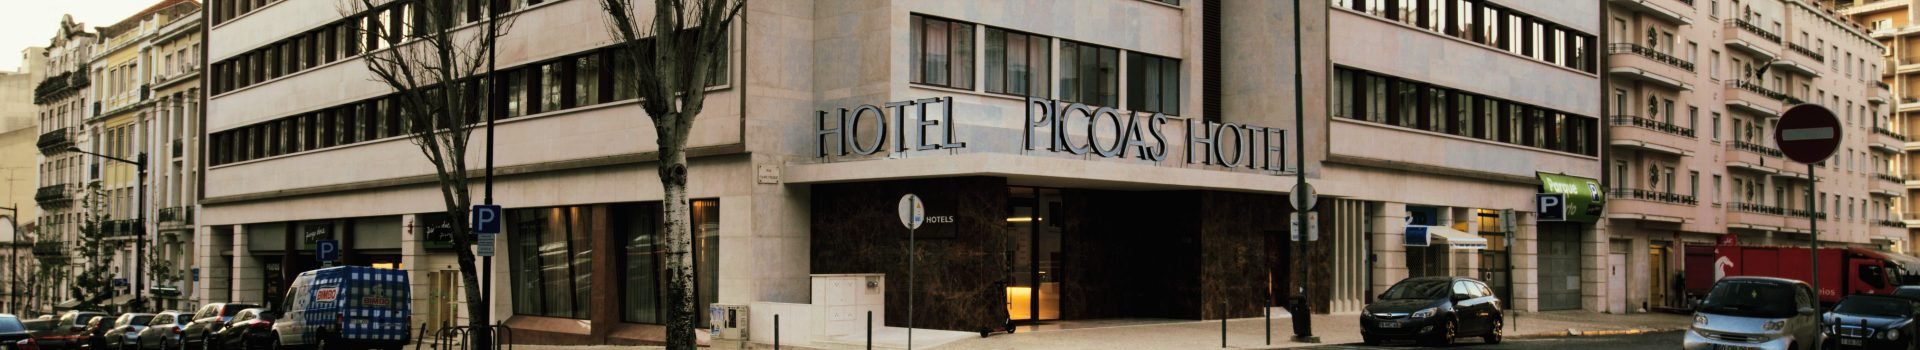  VIP Executive Picoas Hotel Lisboa